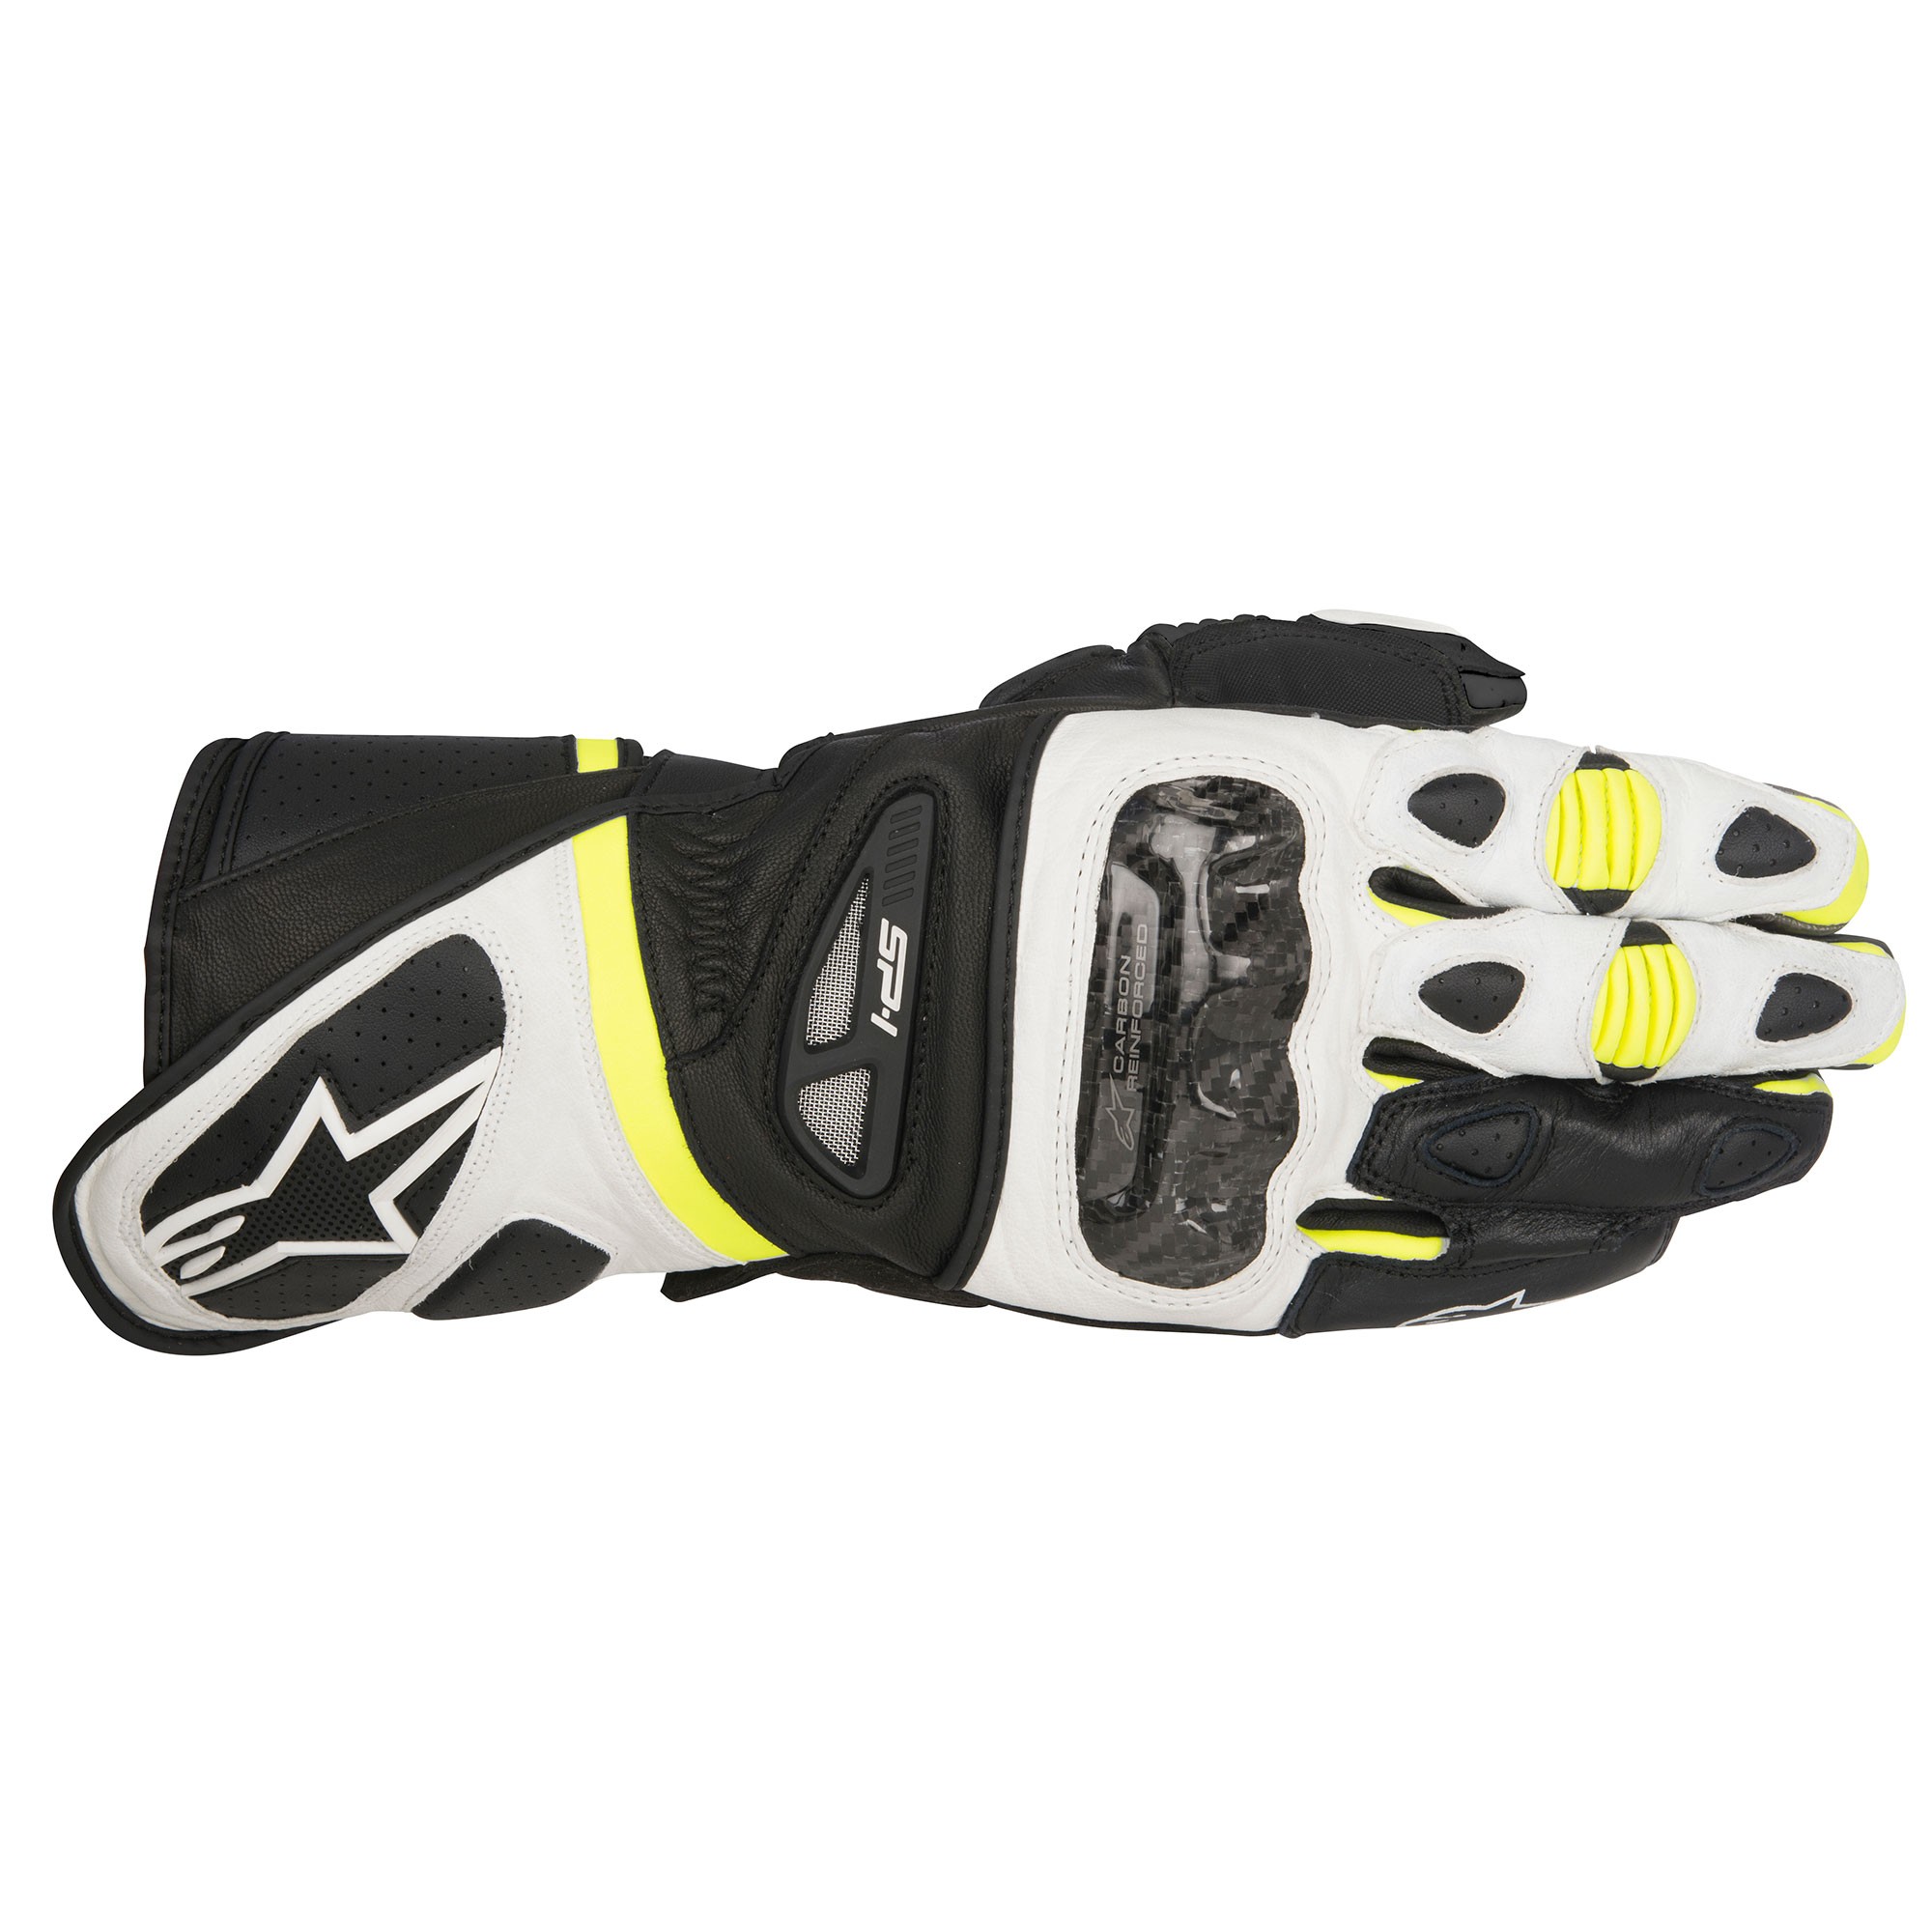 Main image of Alpinestars SP-1 Leather Glove (Blk/Wht/Yllw)